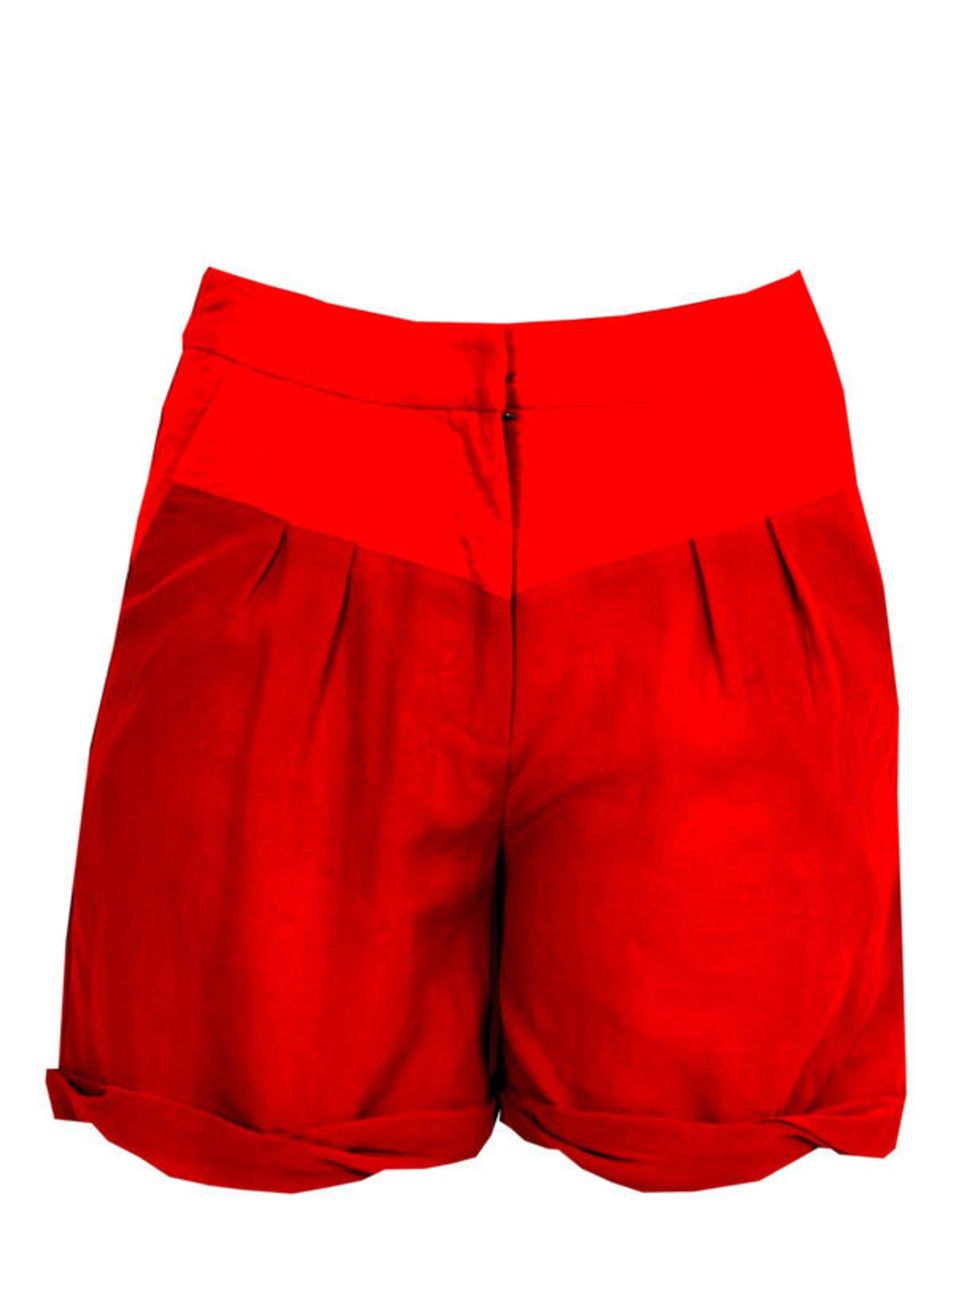 <p>Under.Ligne twisted hem shorts, £170, at <a href="http://www.oxygenboutique.com/product/underligne/boyfriend-shorts/2214/">Oxygen Boutique</a></p>